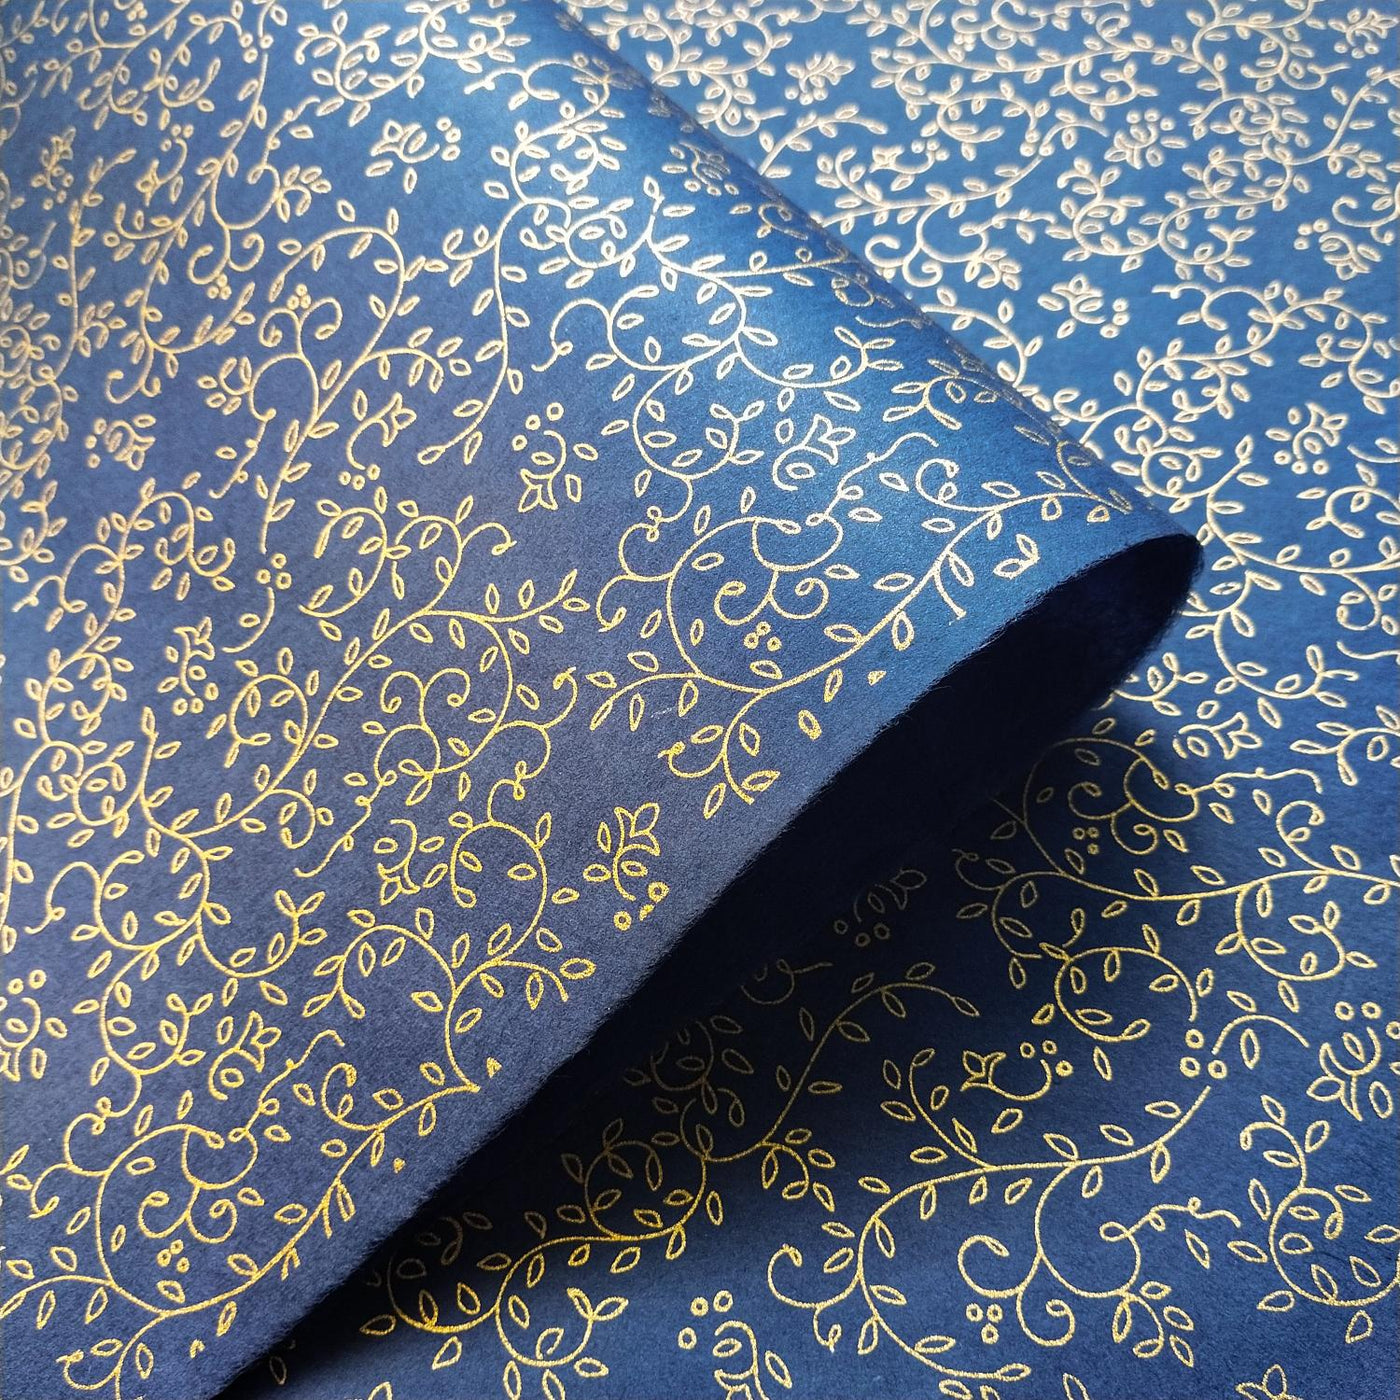 Grapevine Screen-printed Kozo Mulberry Paper Blue